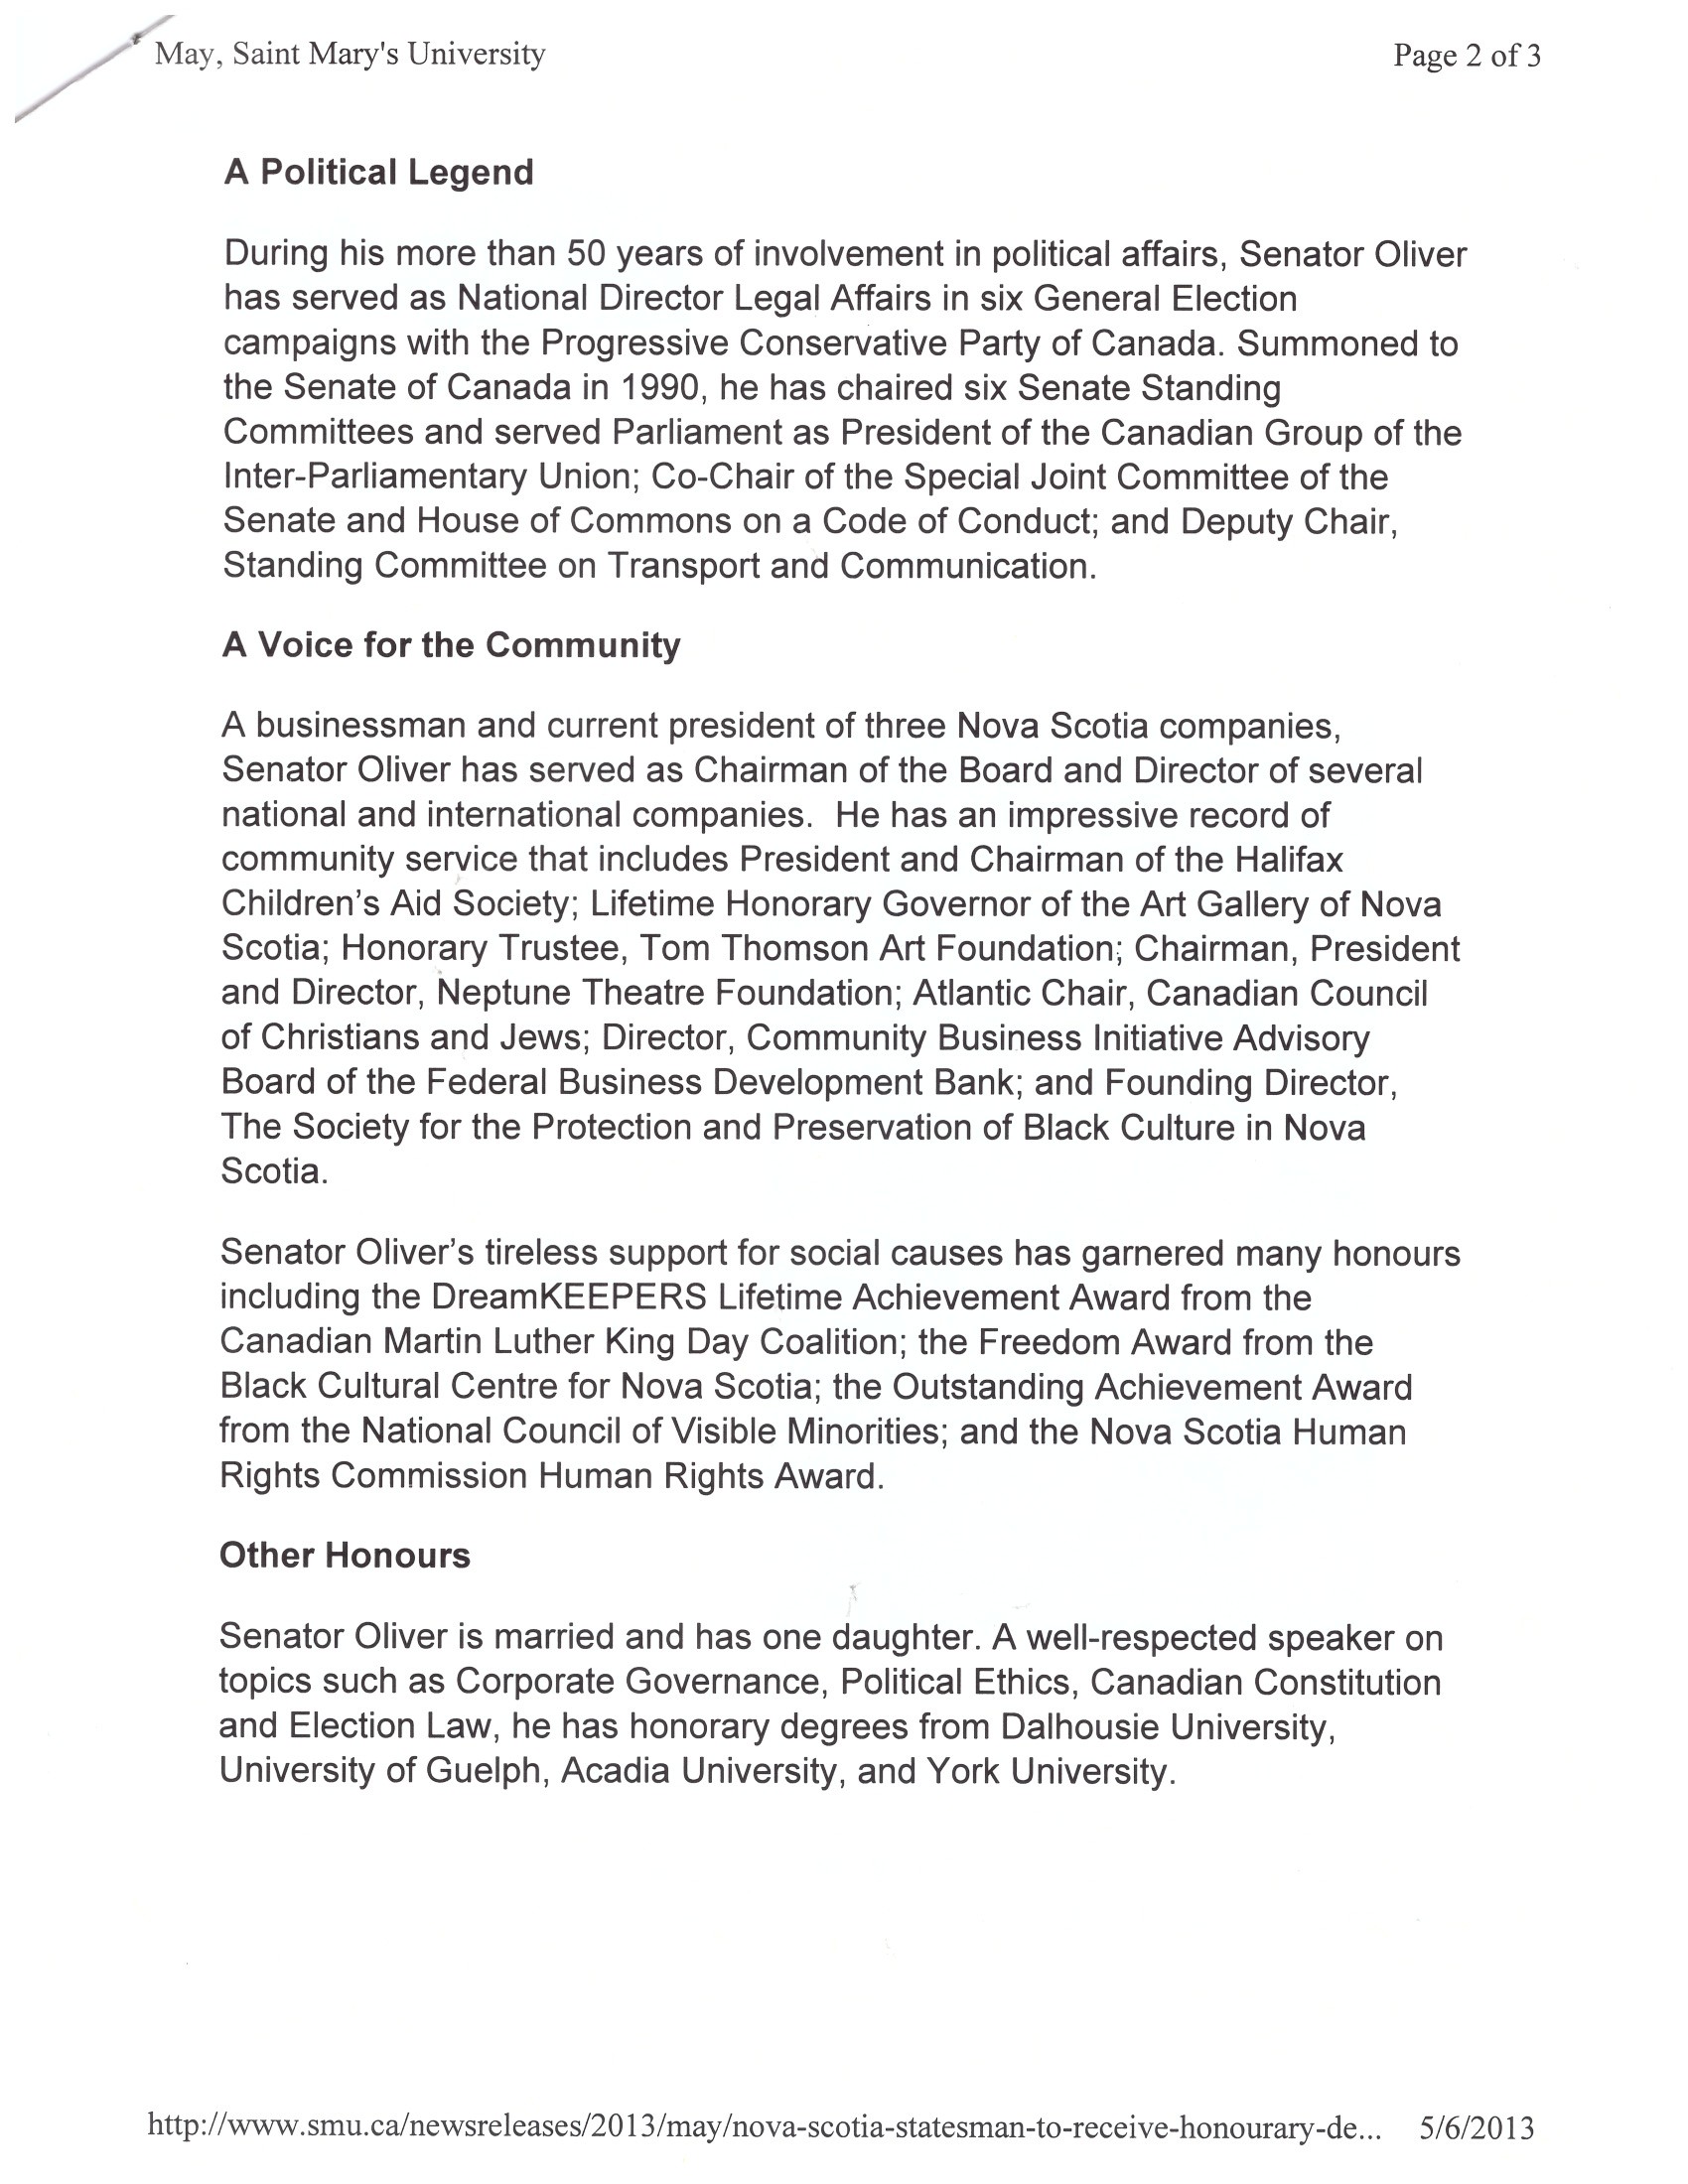 Nova Scotia Statesman To Receive Honourary Degree-Saint Marys University, May 2013 pg2&3